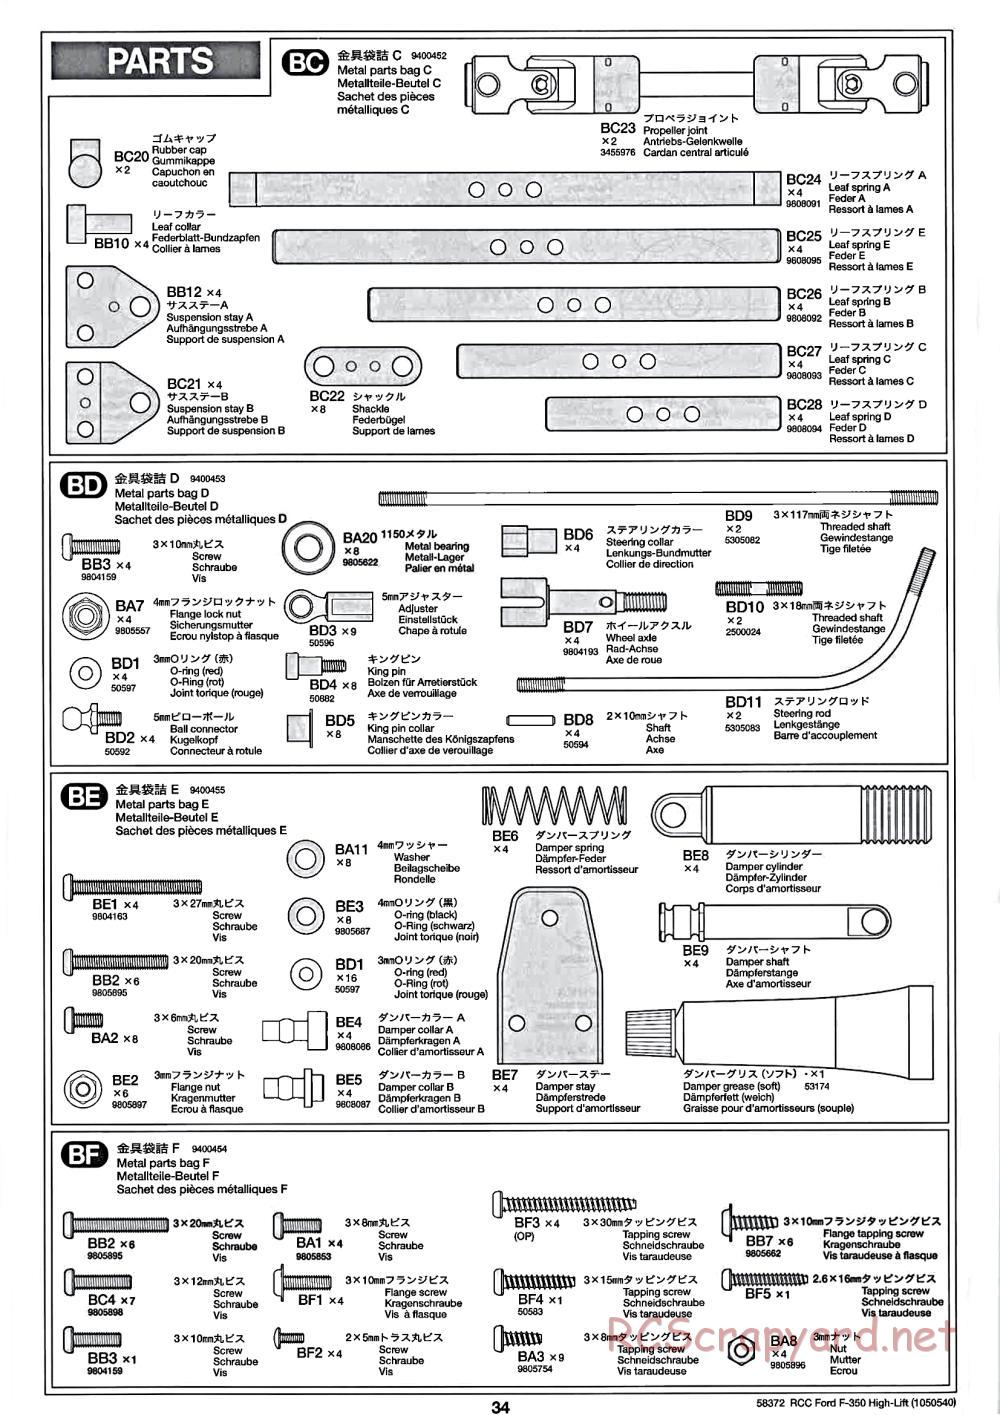 Tamiya - Ford F350 High-Lift Chassis - Manual - Page 34